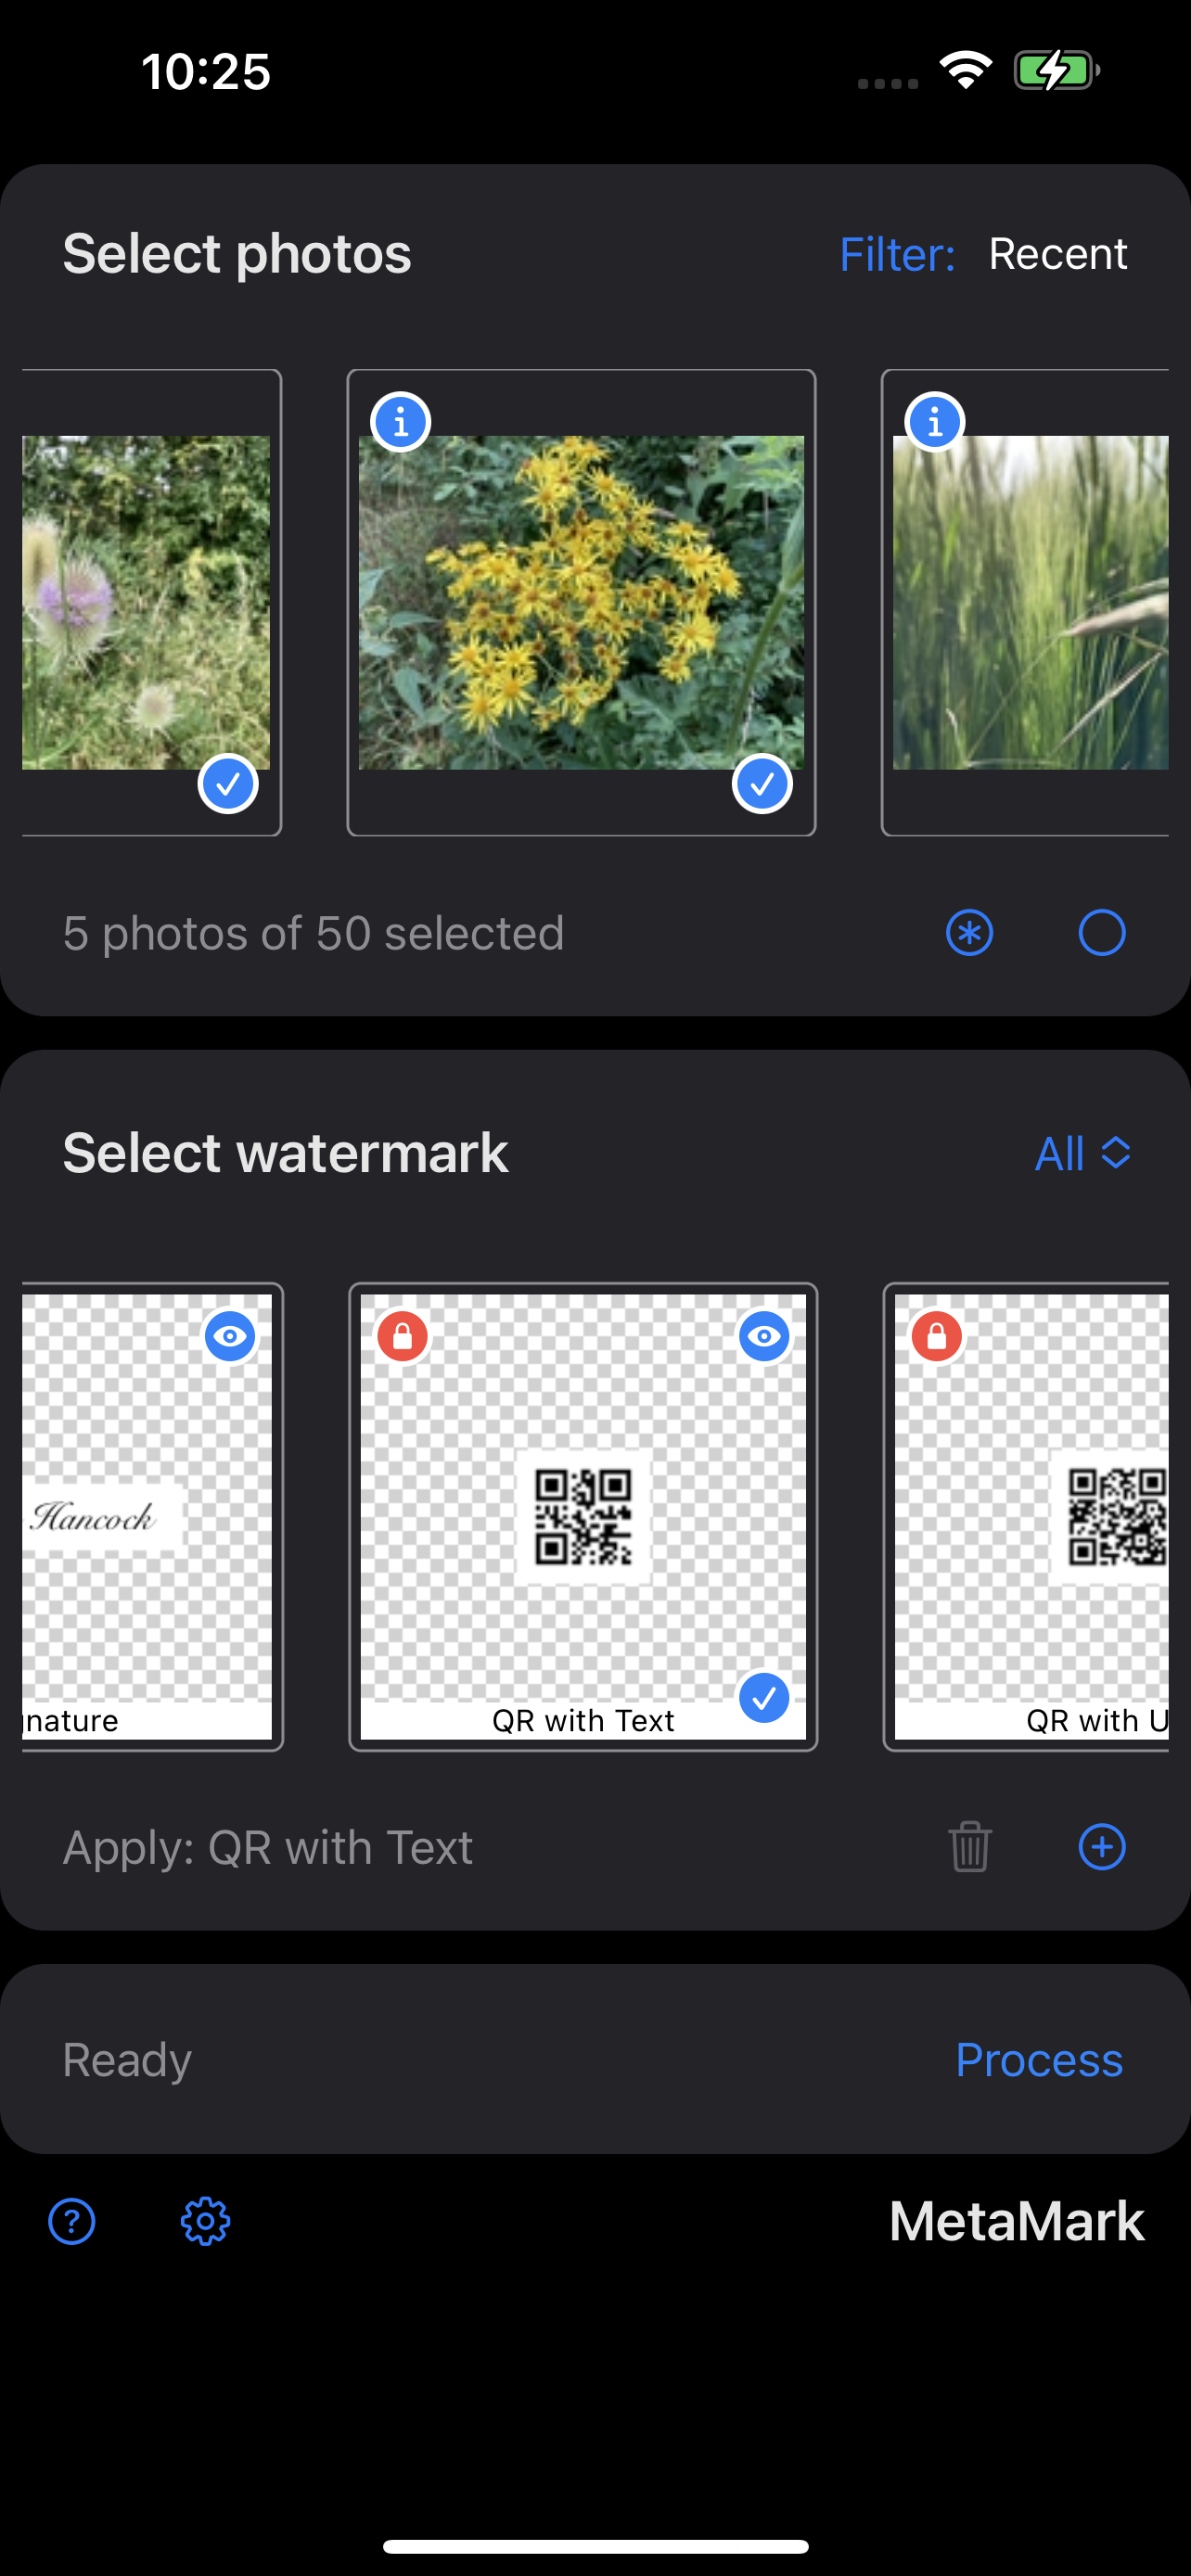 MetaMark Watermark Photos on iPhone